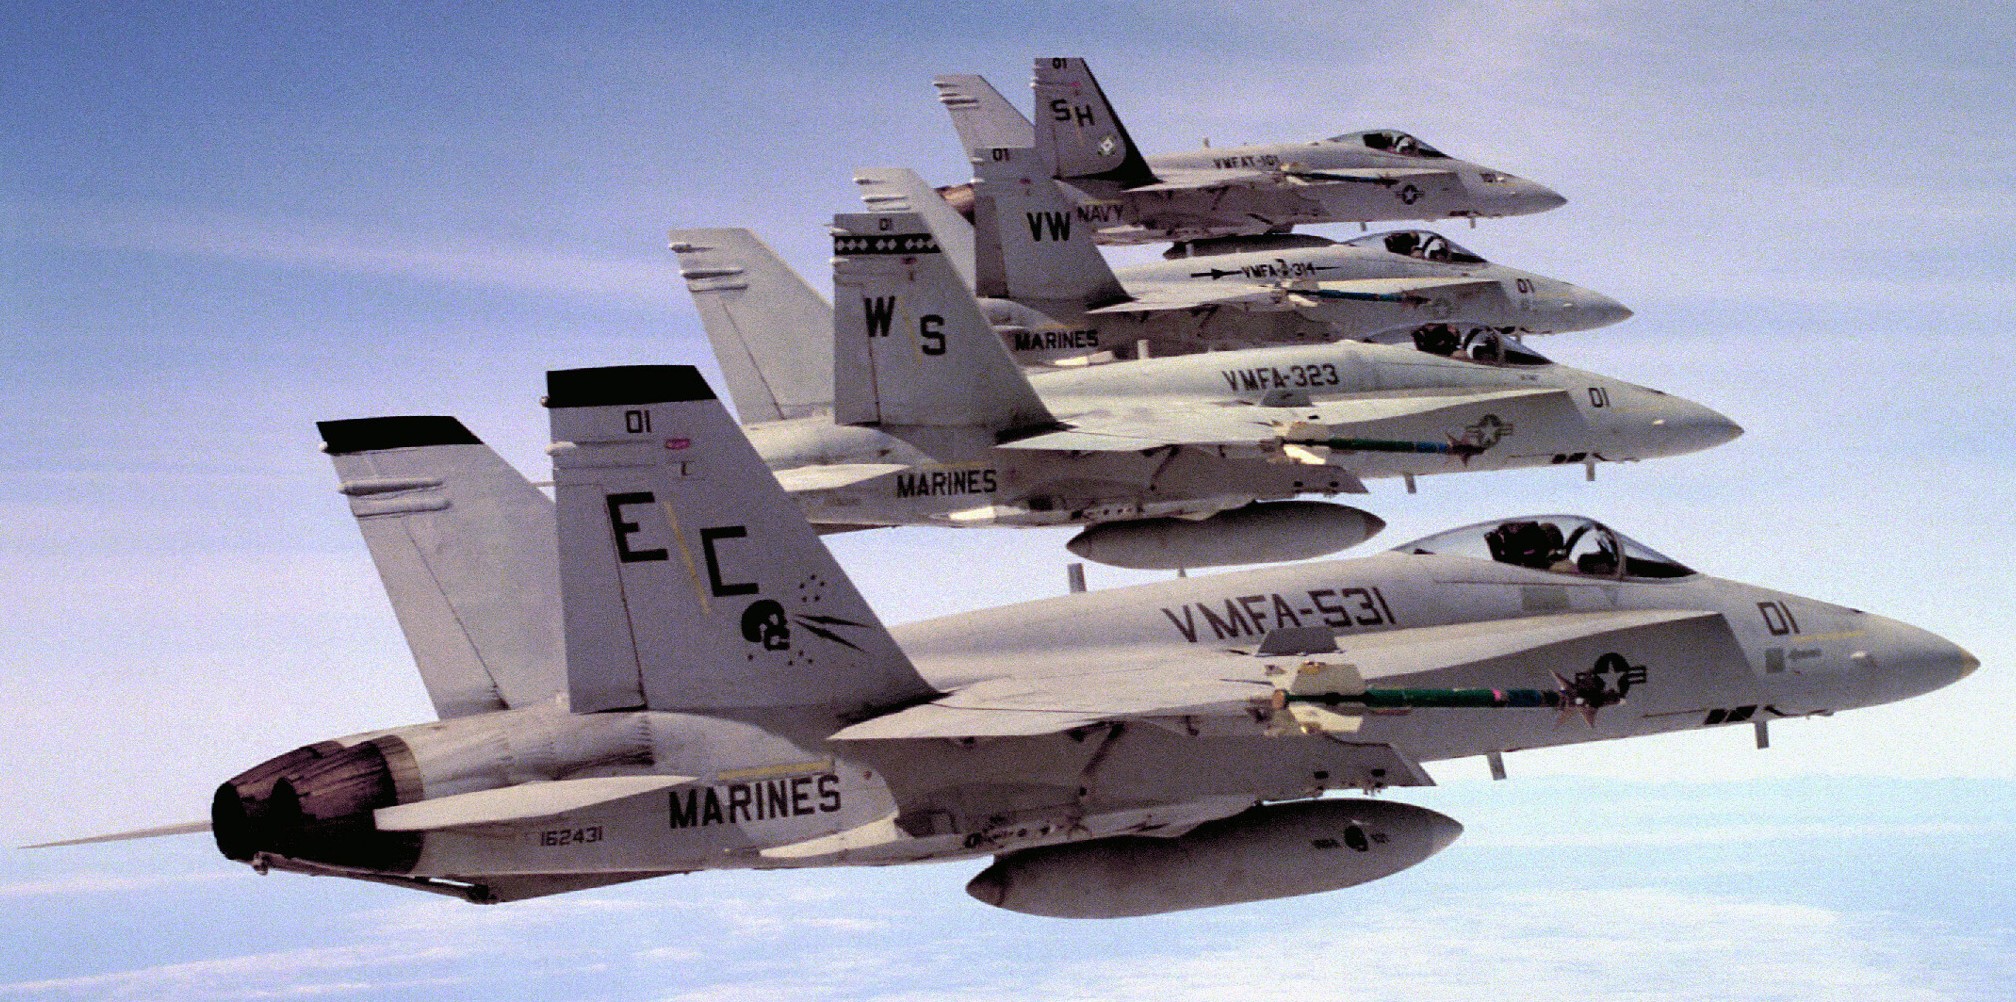 vmfa-531 grey ghosts marine fighter attack squadron f/a-18a hornet usmc 23 mcas el toro california